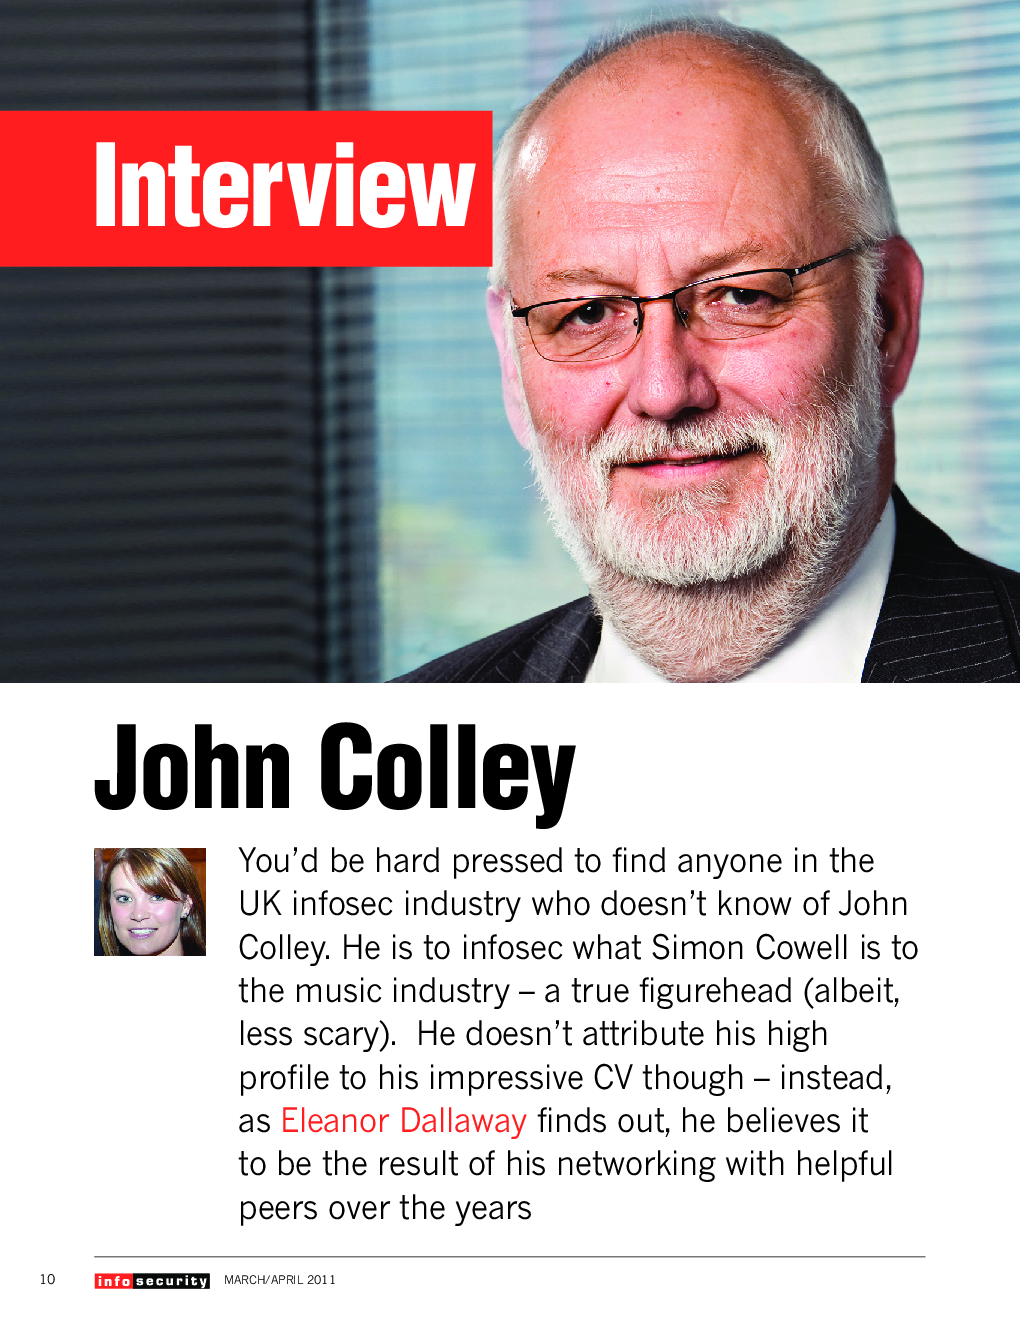 John Colley